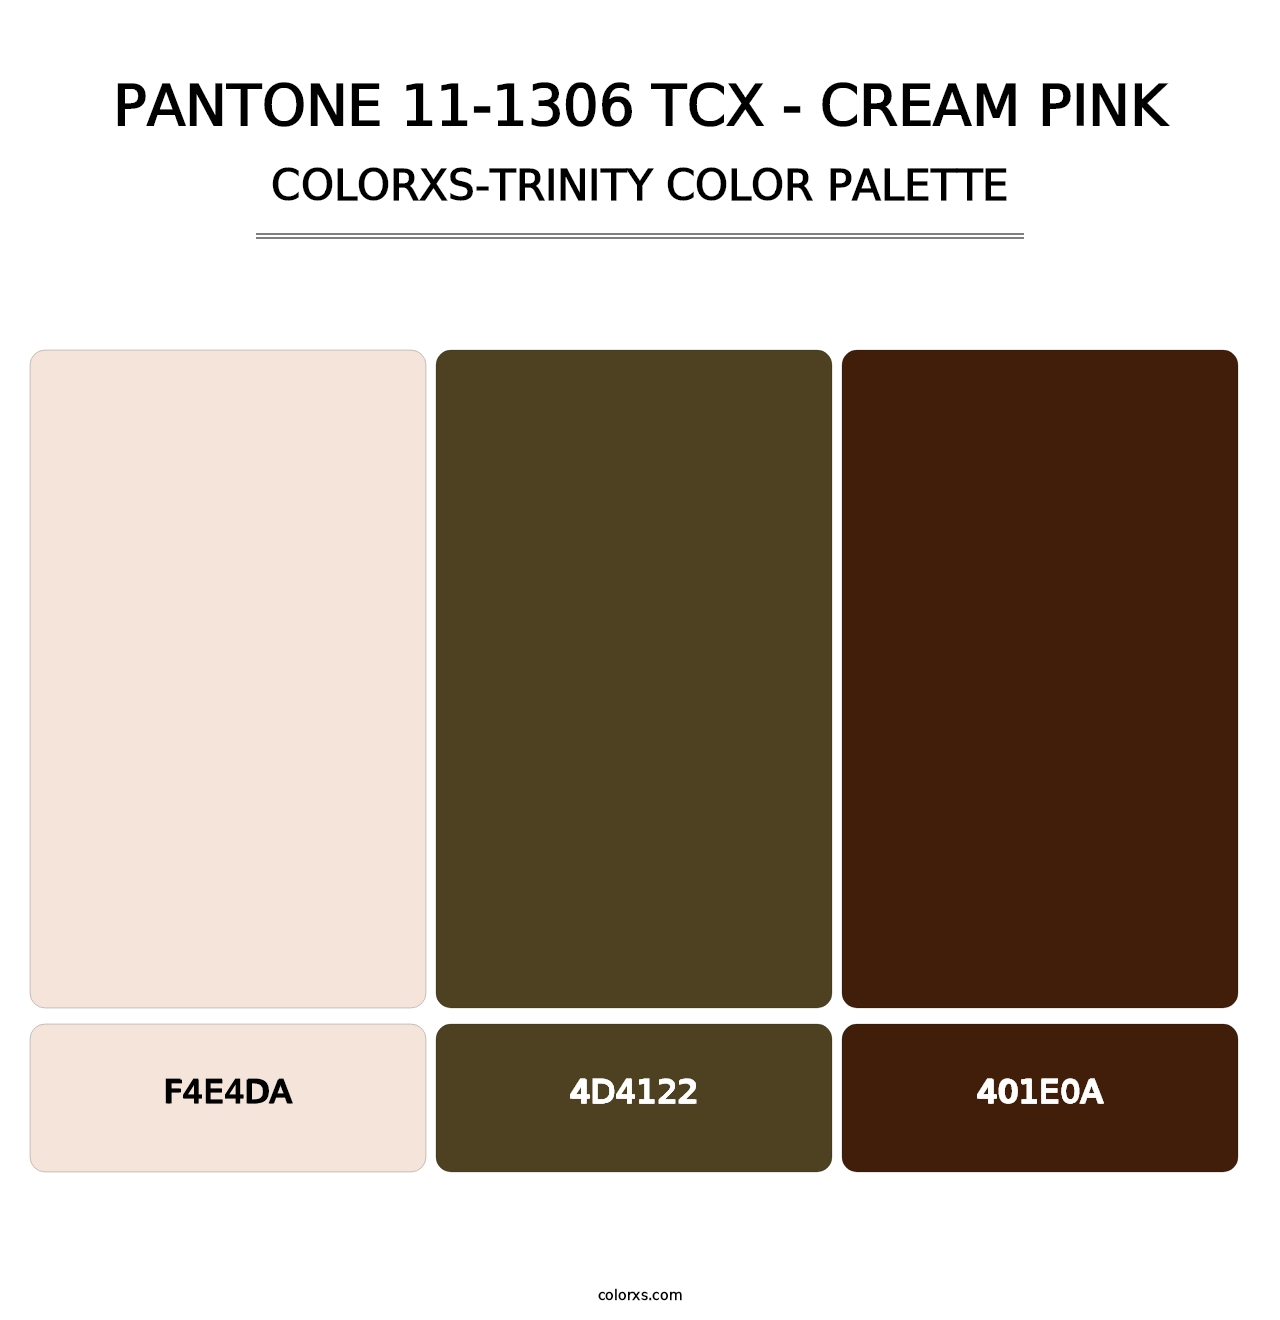 PANTONE 11-1306 TCX - Cream Pink - Colorxs Trinity Palette